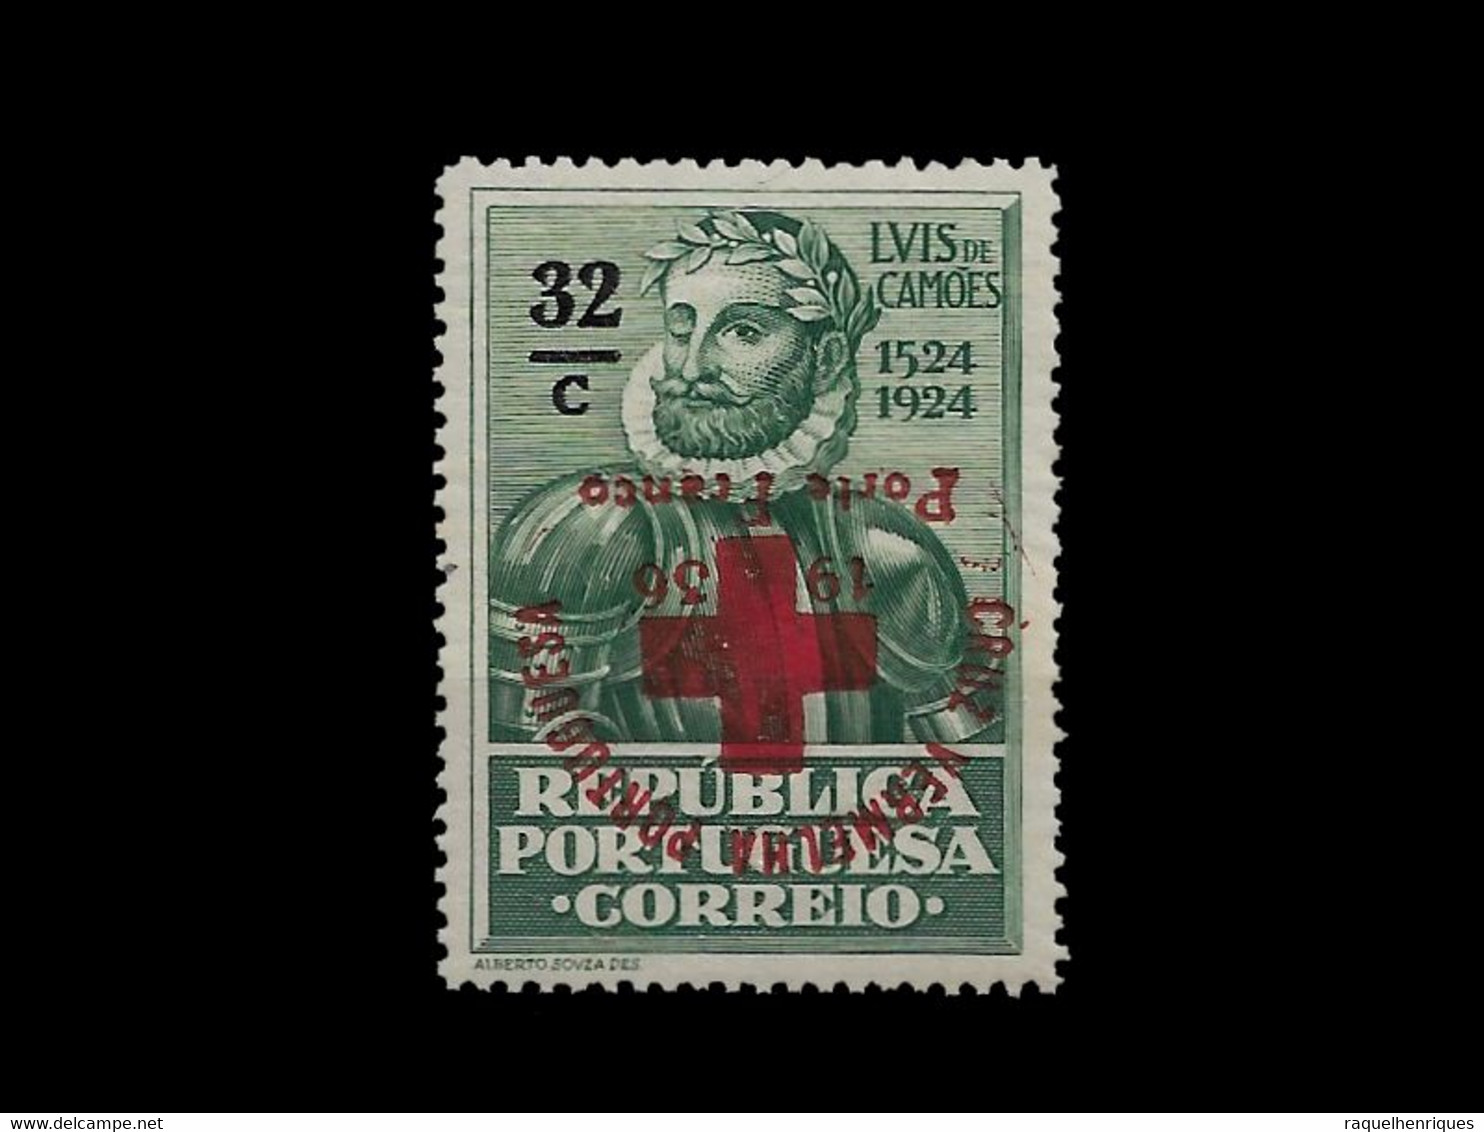 PORTUGAL PORTE FRANCO - 1936 ERROR UPSIDE DOWN SURCHARGED MNH (PLB#01-135) - Ongebruikt